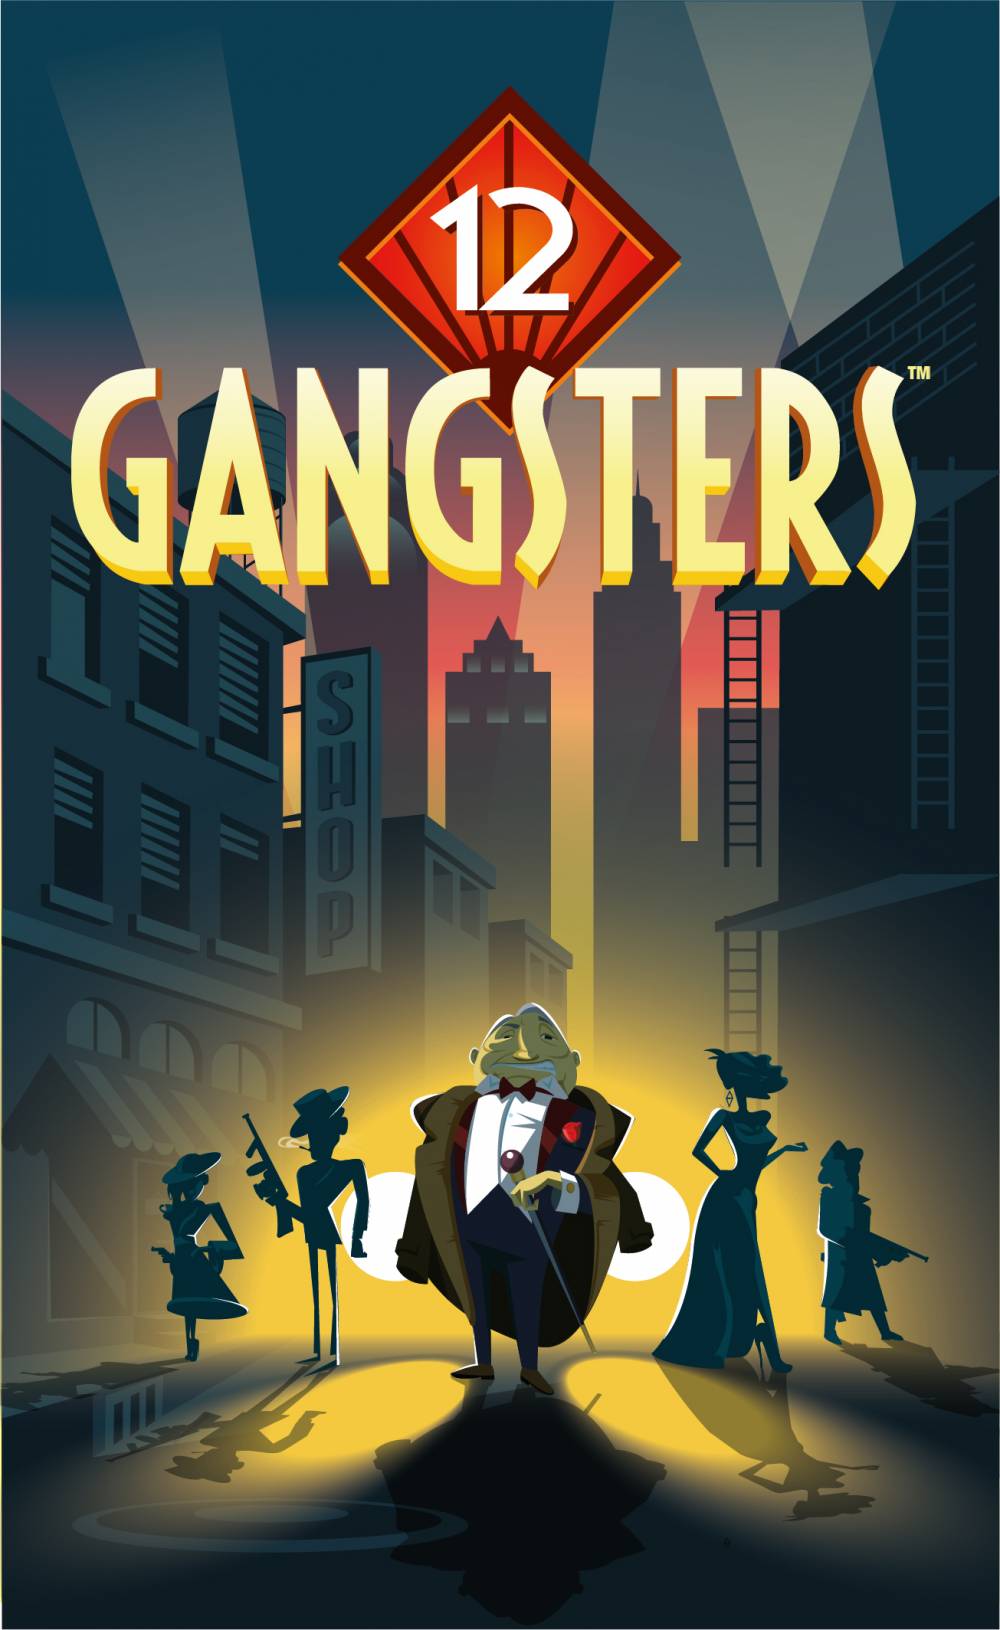 12 gangsters